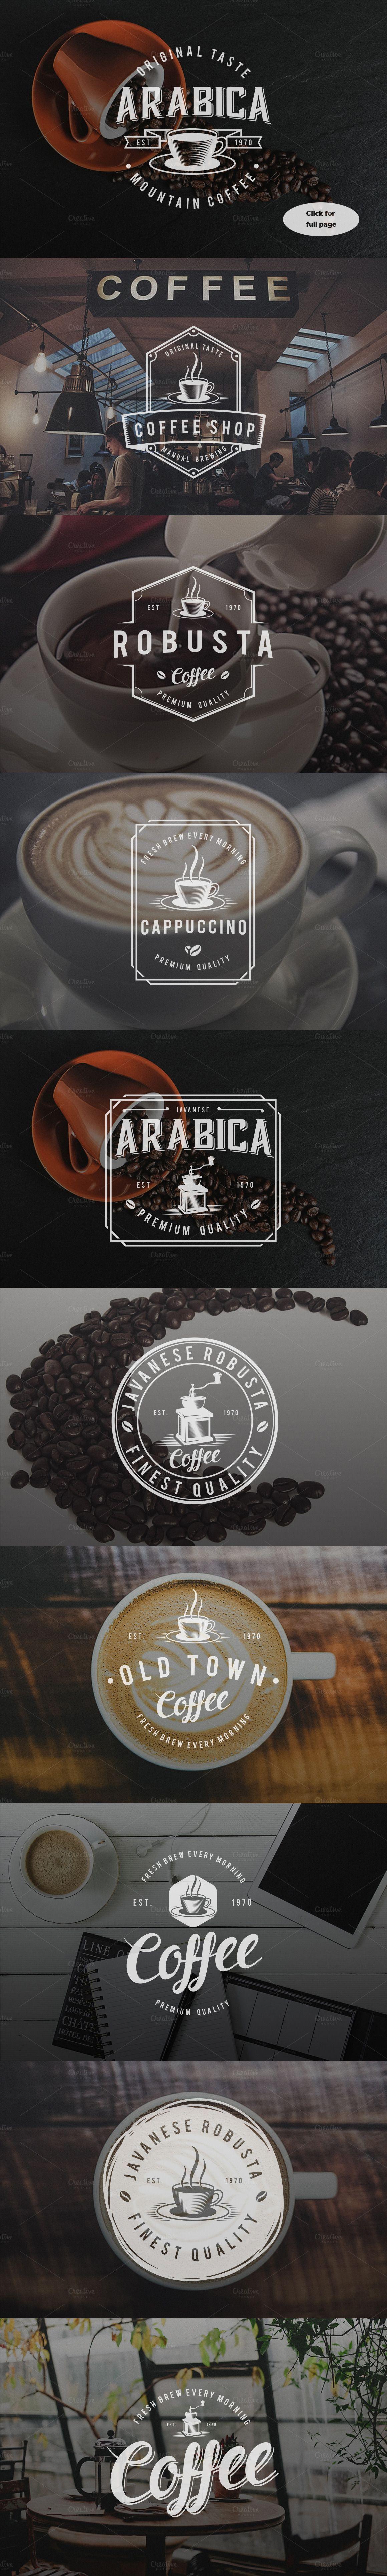 Vintage Coffee Shop Logo - Vintage Coffee Logo Badges: logo templates perfect for branding a